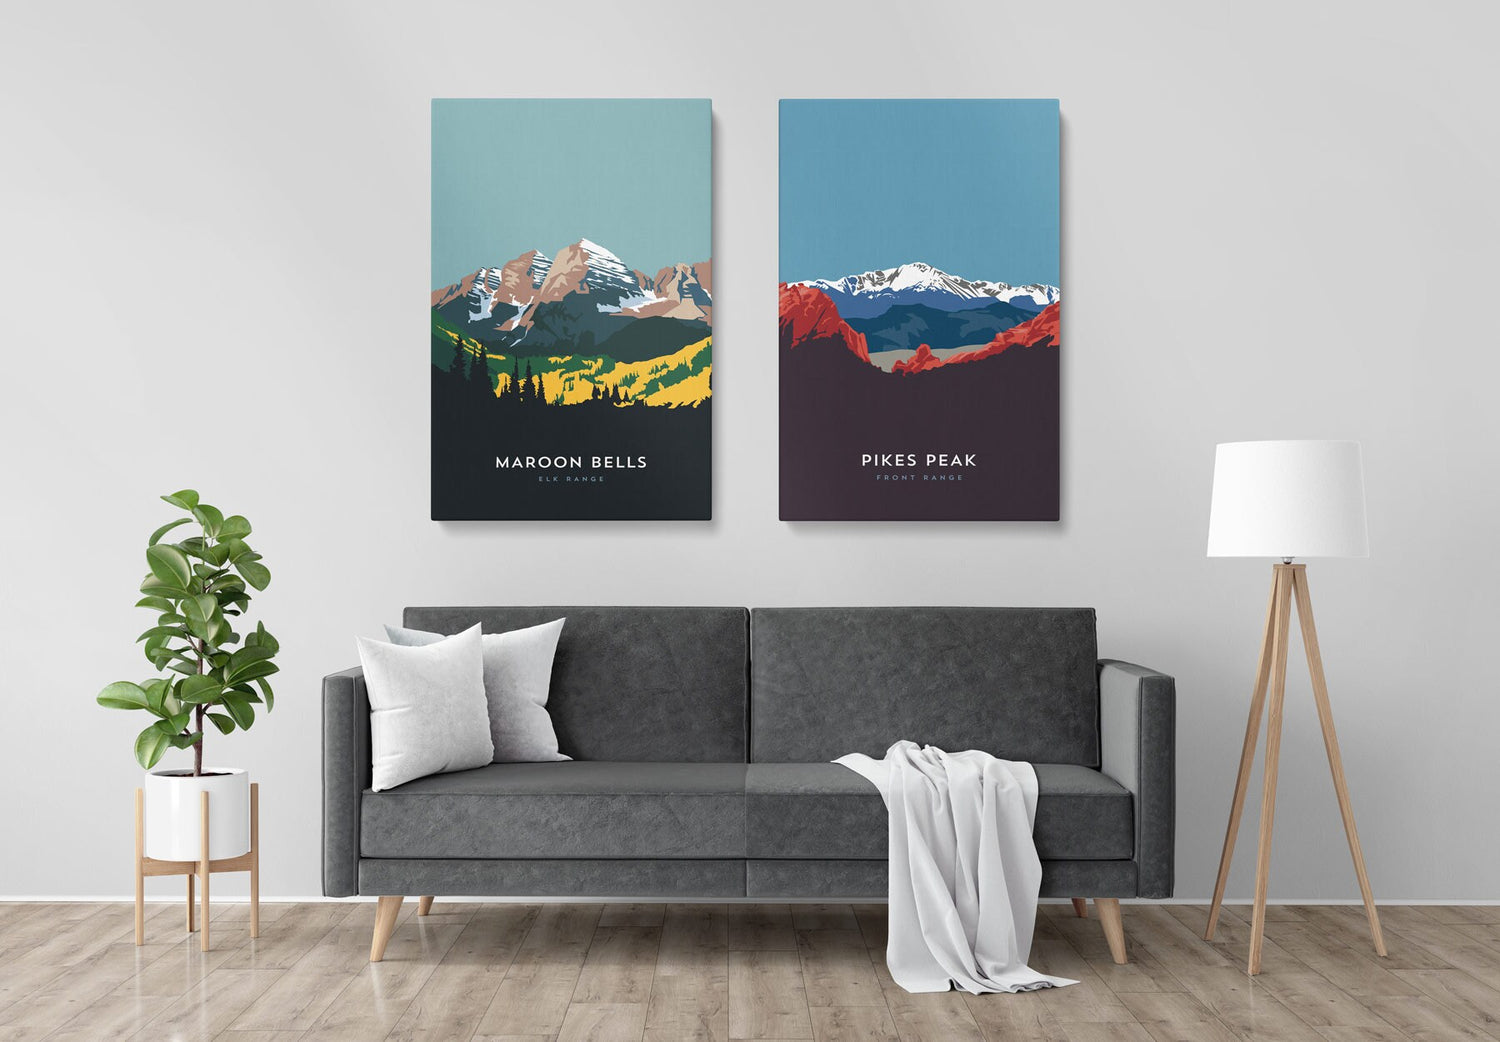 Mount Eolus Colorado 14er Canvas Print